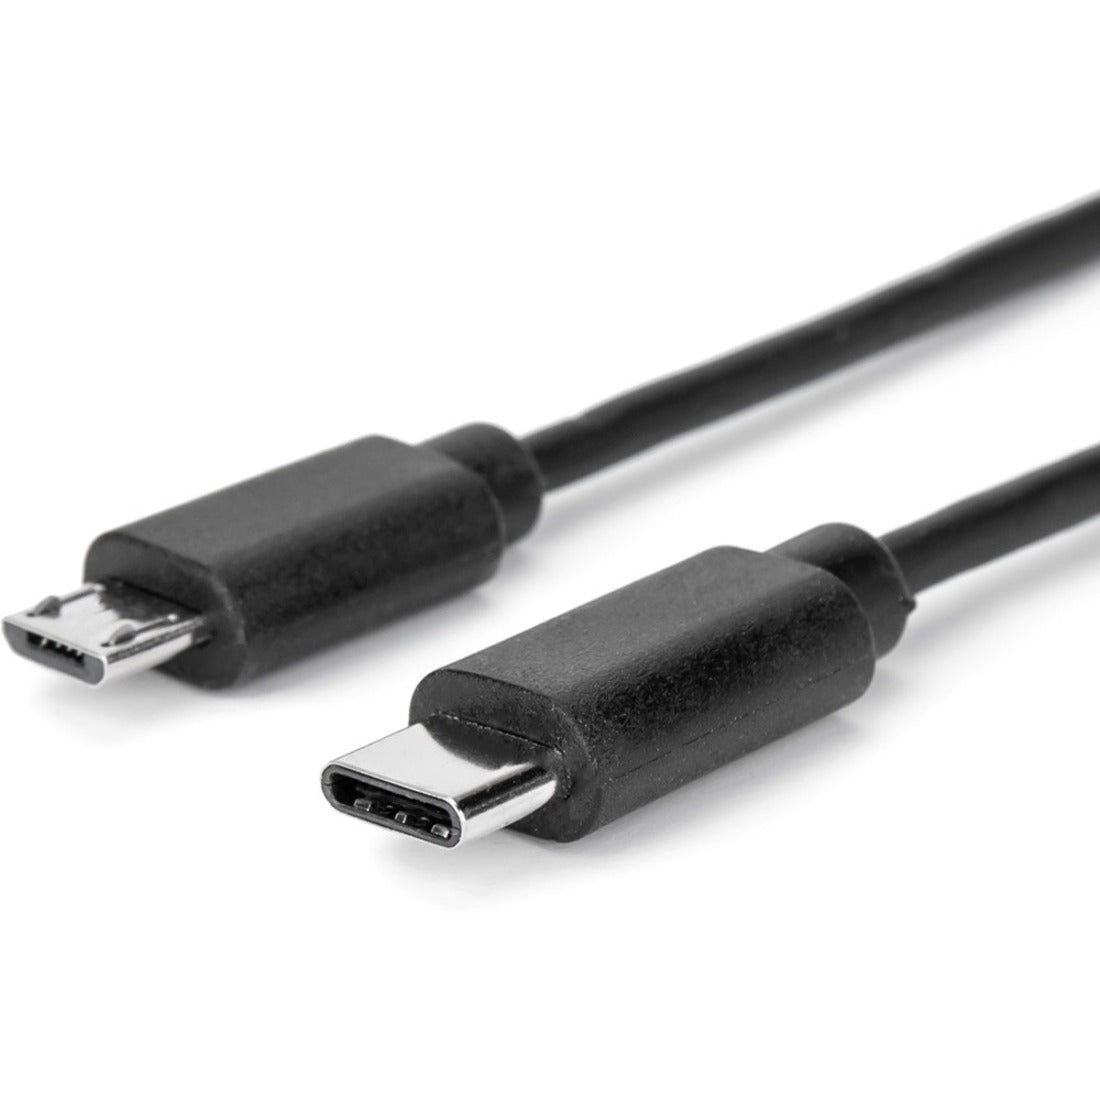 Rocstor Y10C140-B1 Premium USB Data Transfer Cable, USB-C to Micro-B M/M, 3ft, Black